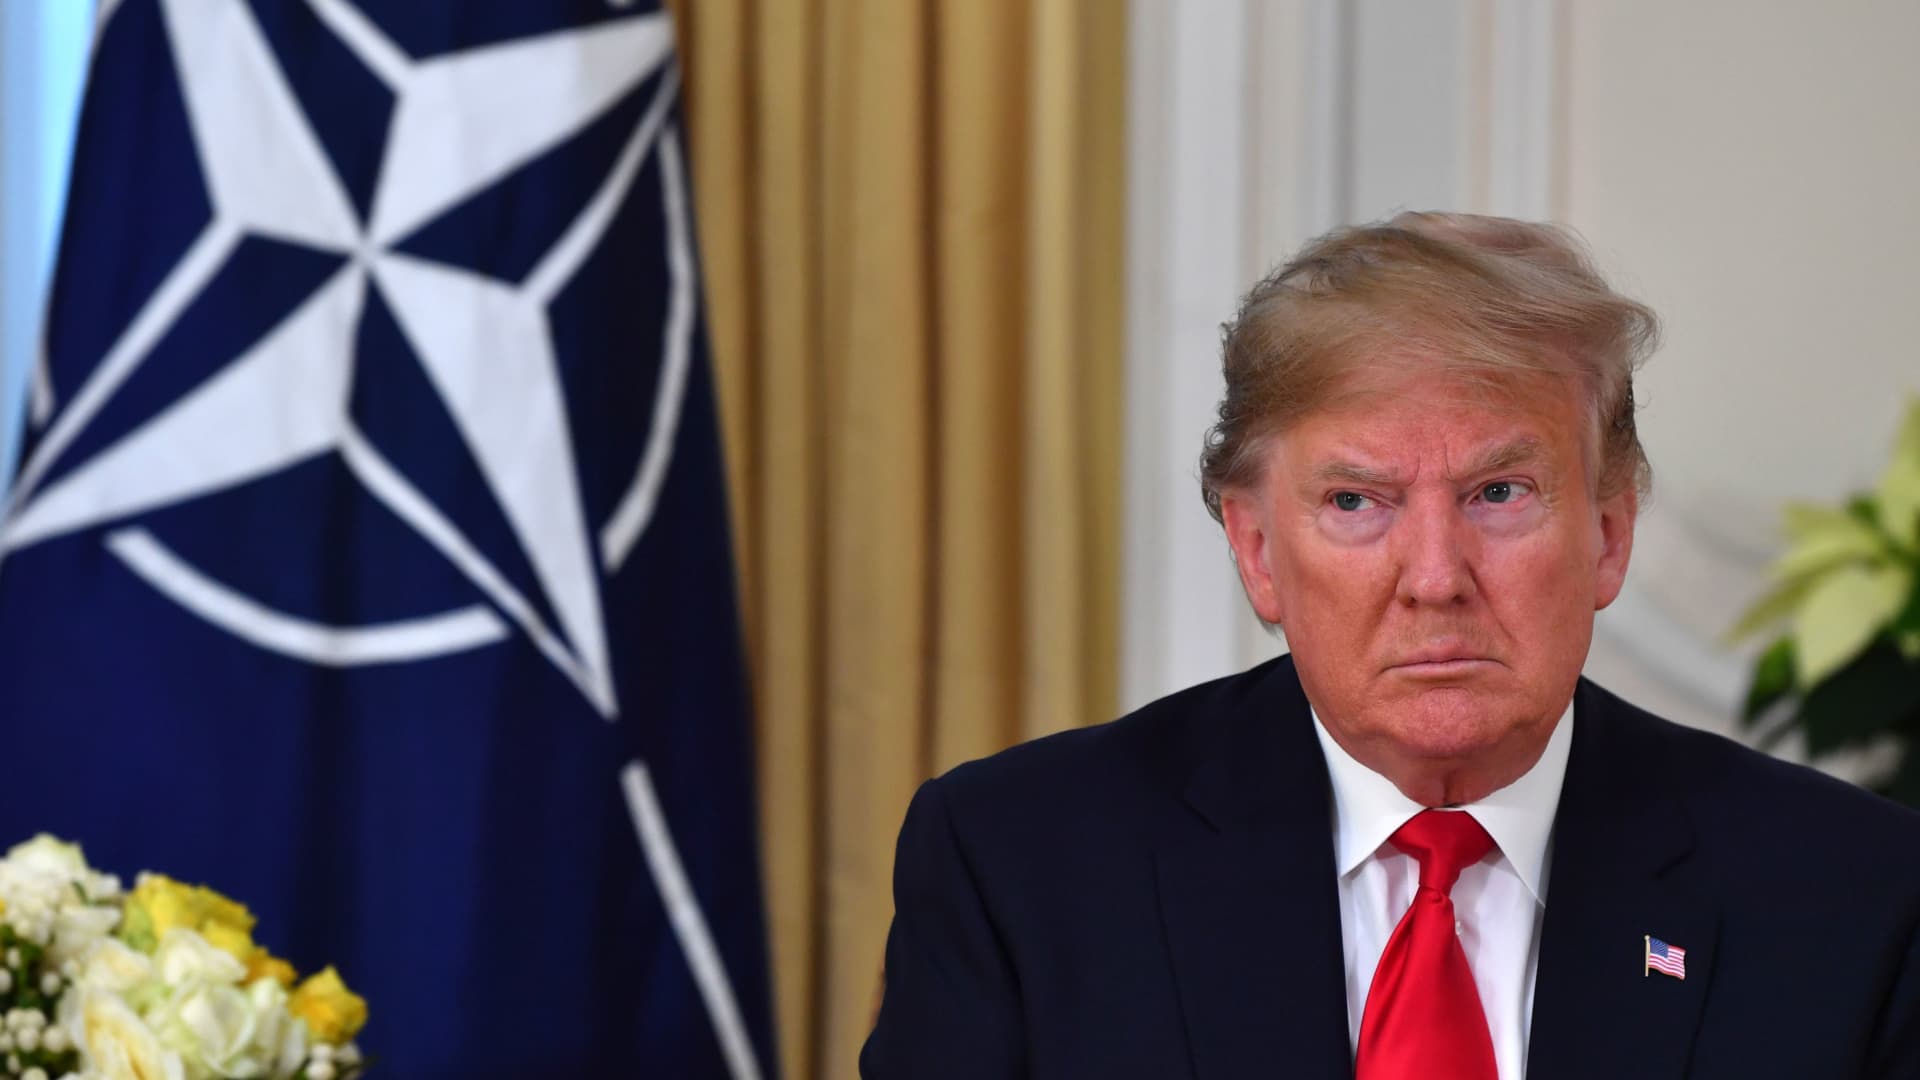 Trump’s NATO comments stir up a political storm as Russia keeps quiet